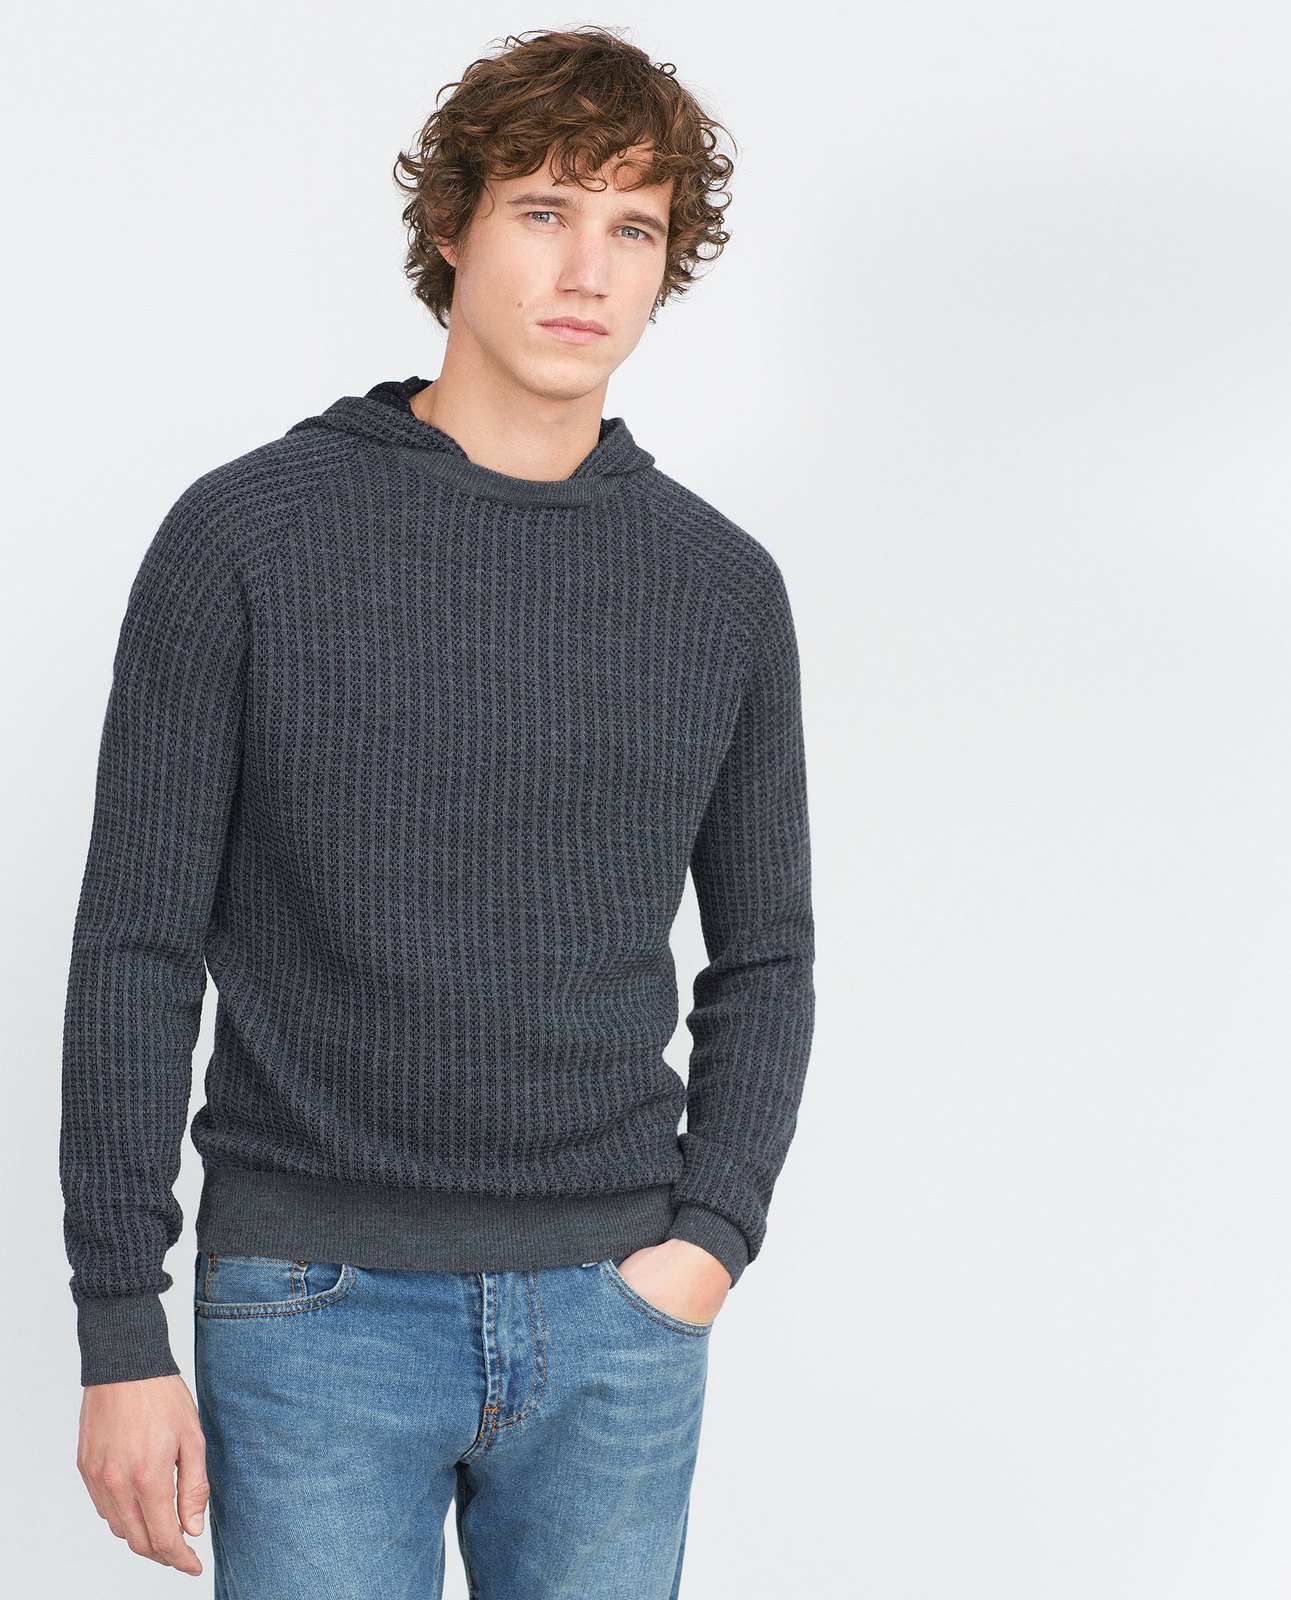 Zara férfi kapucnis pulóver 2015.10.16 fotója